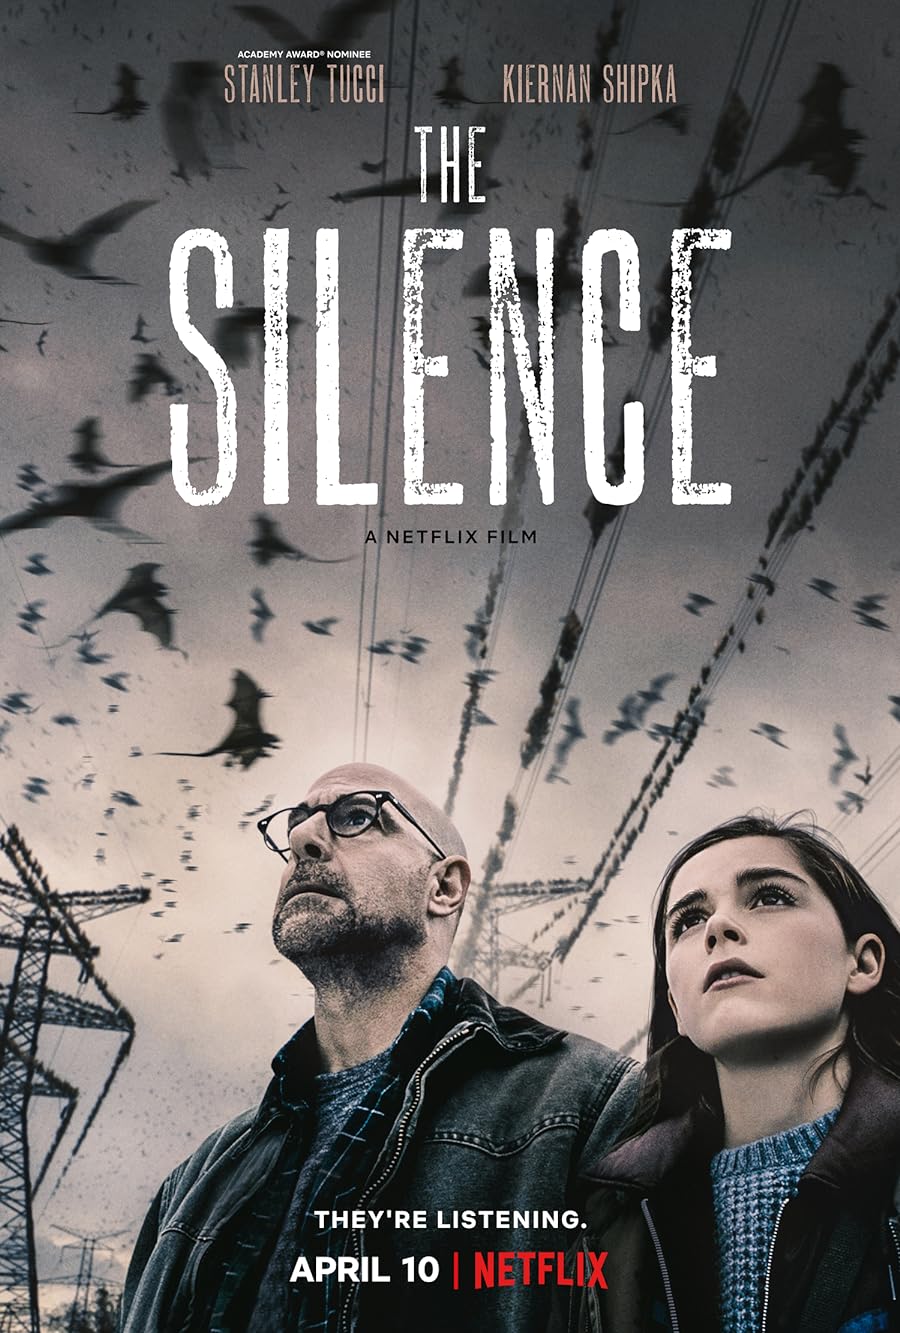 دانلود فیلم The Silence 2019